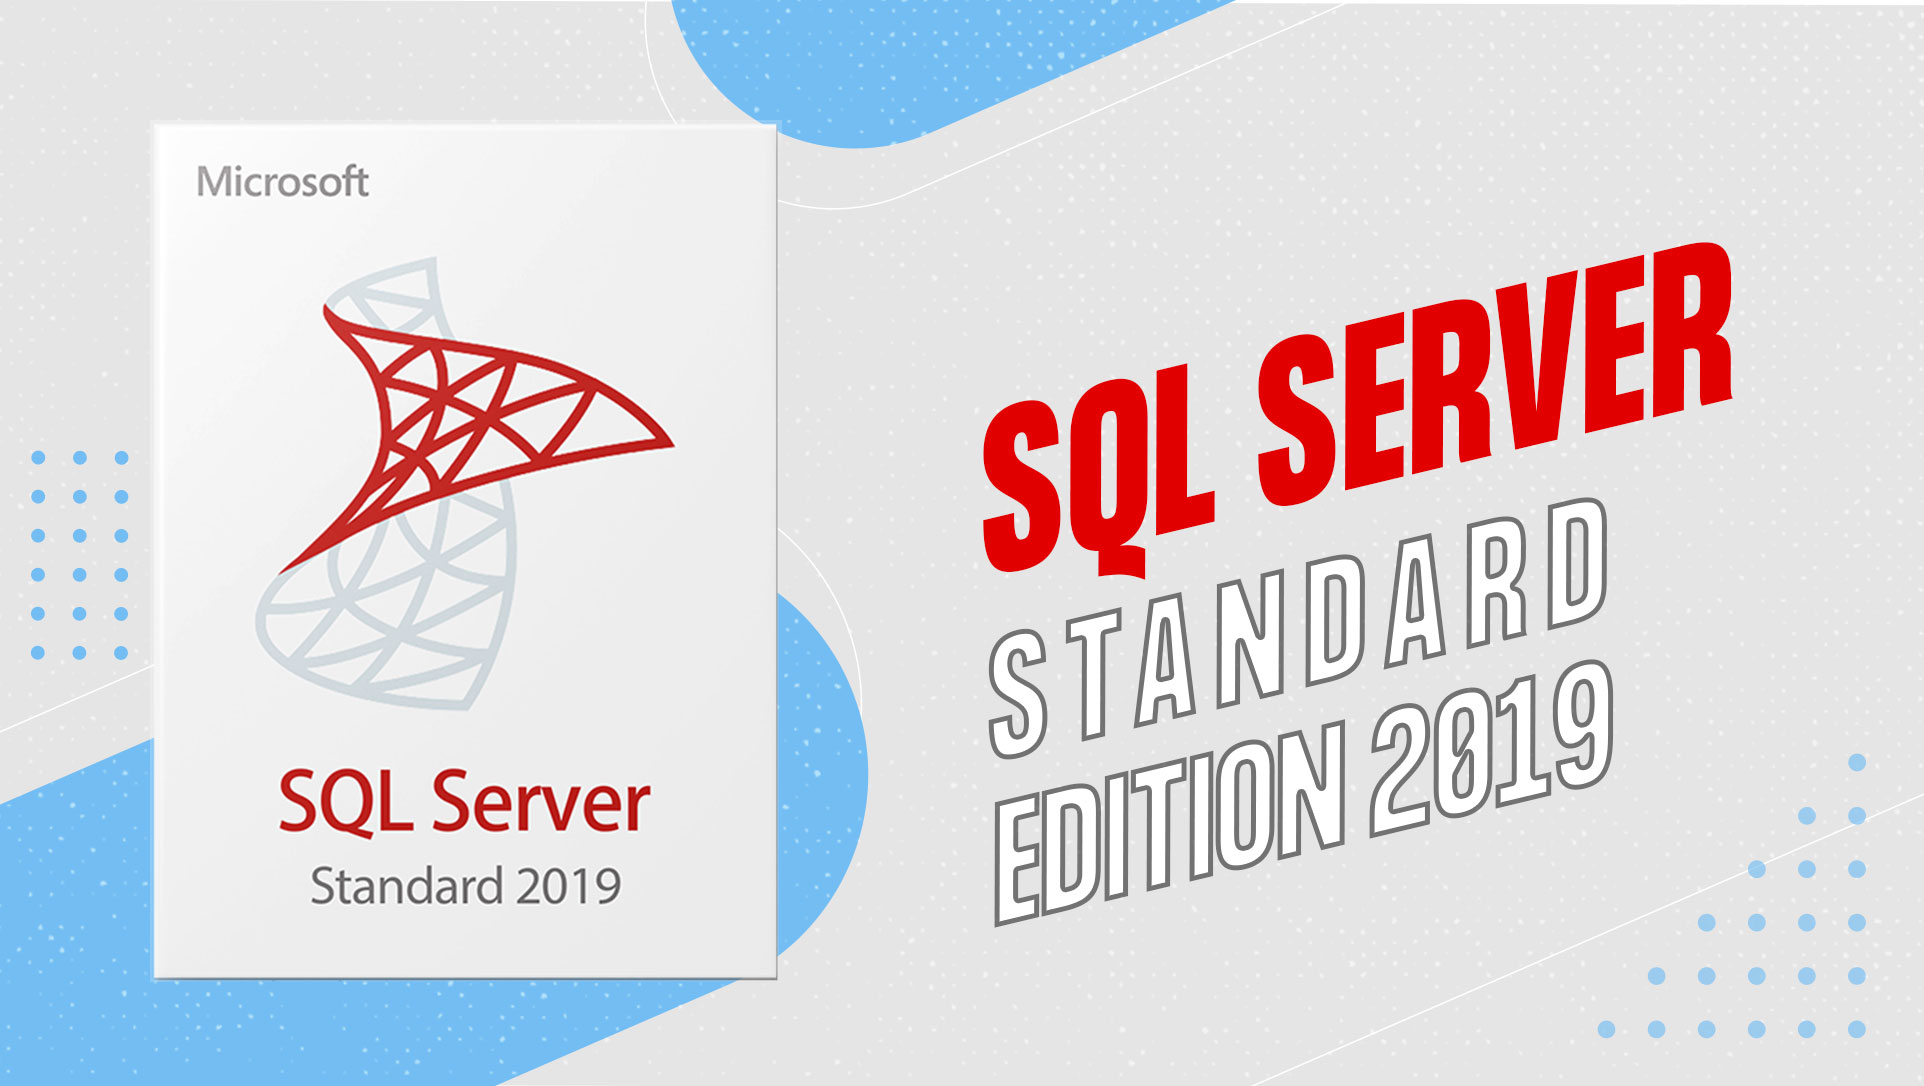 SQL server standard 2019